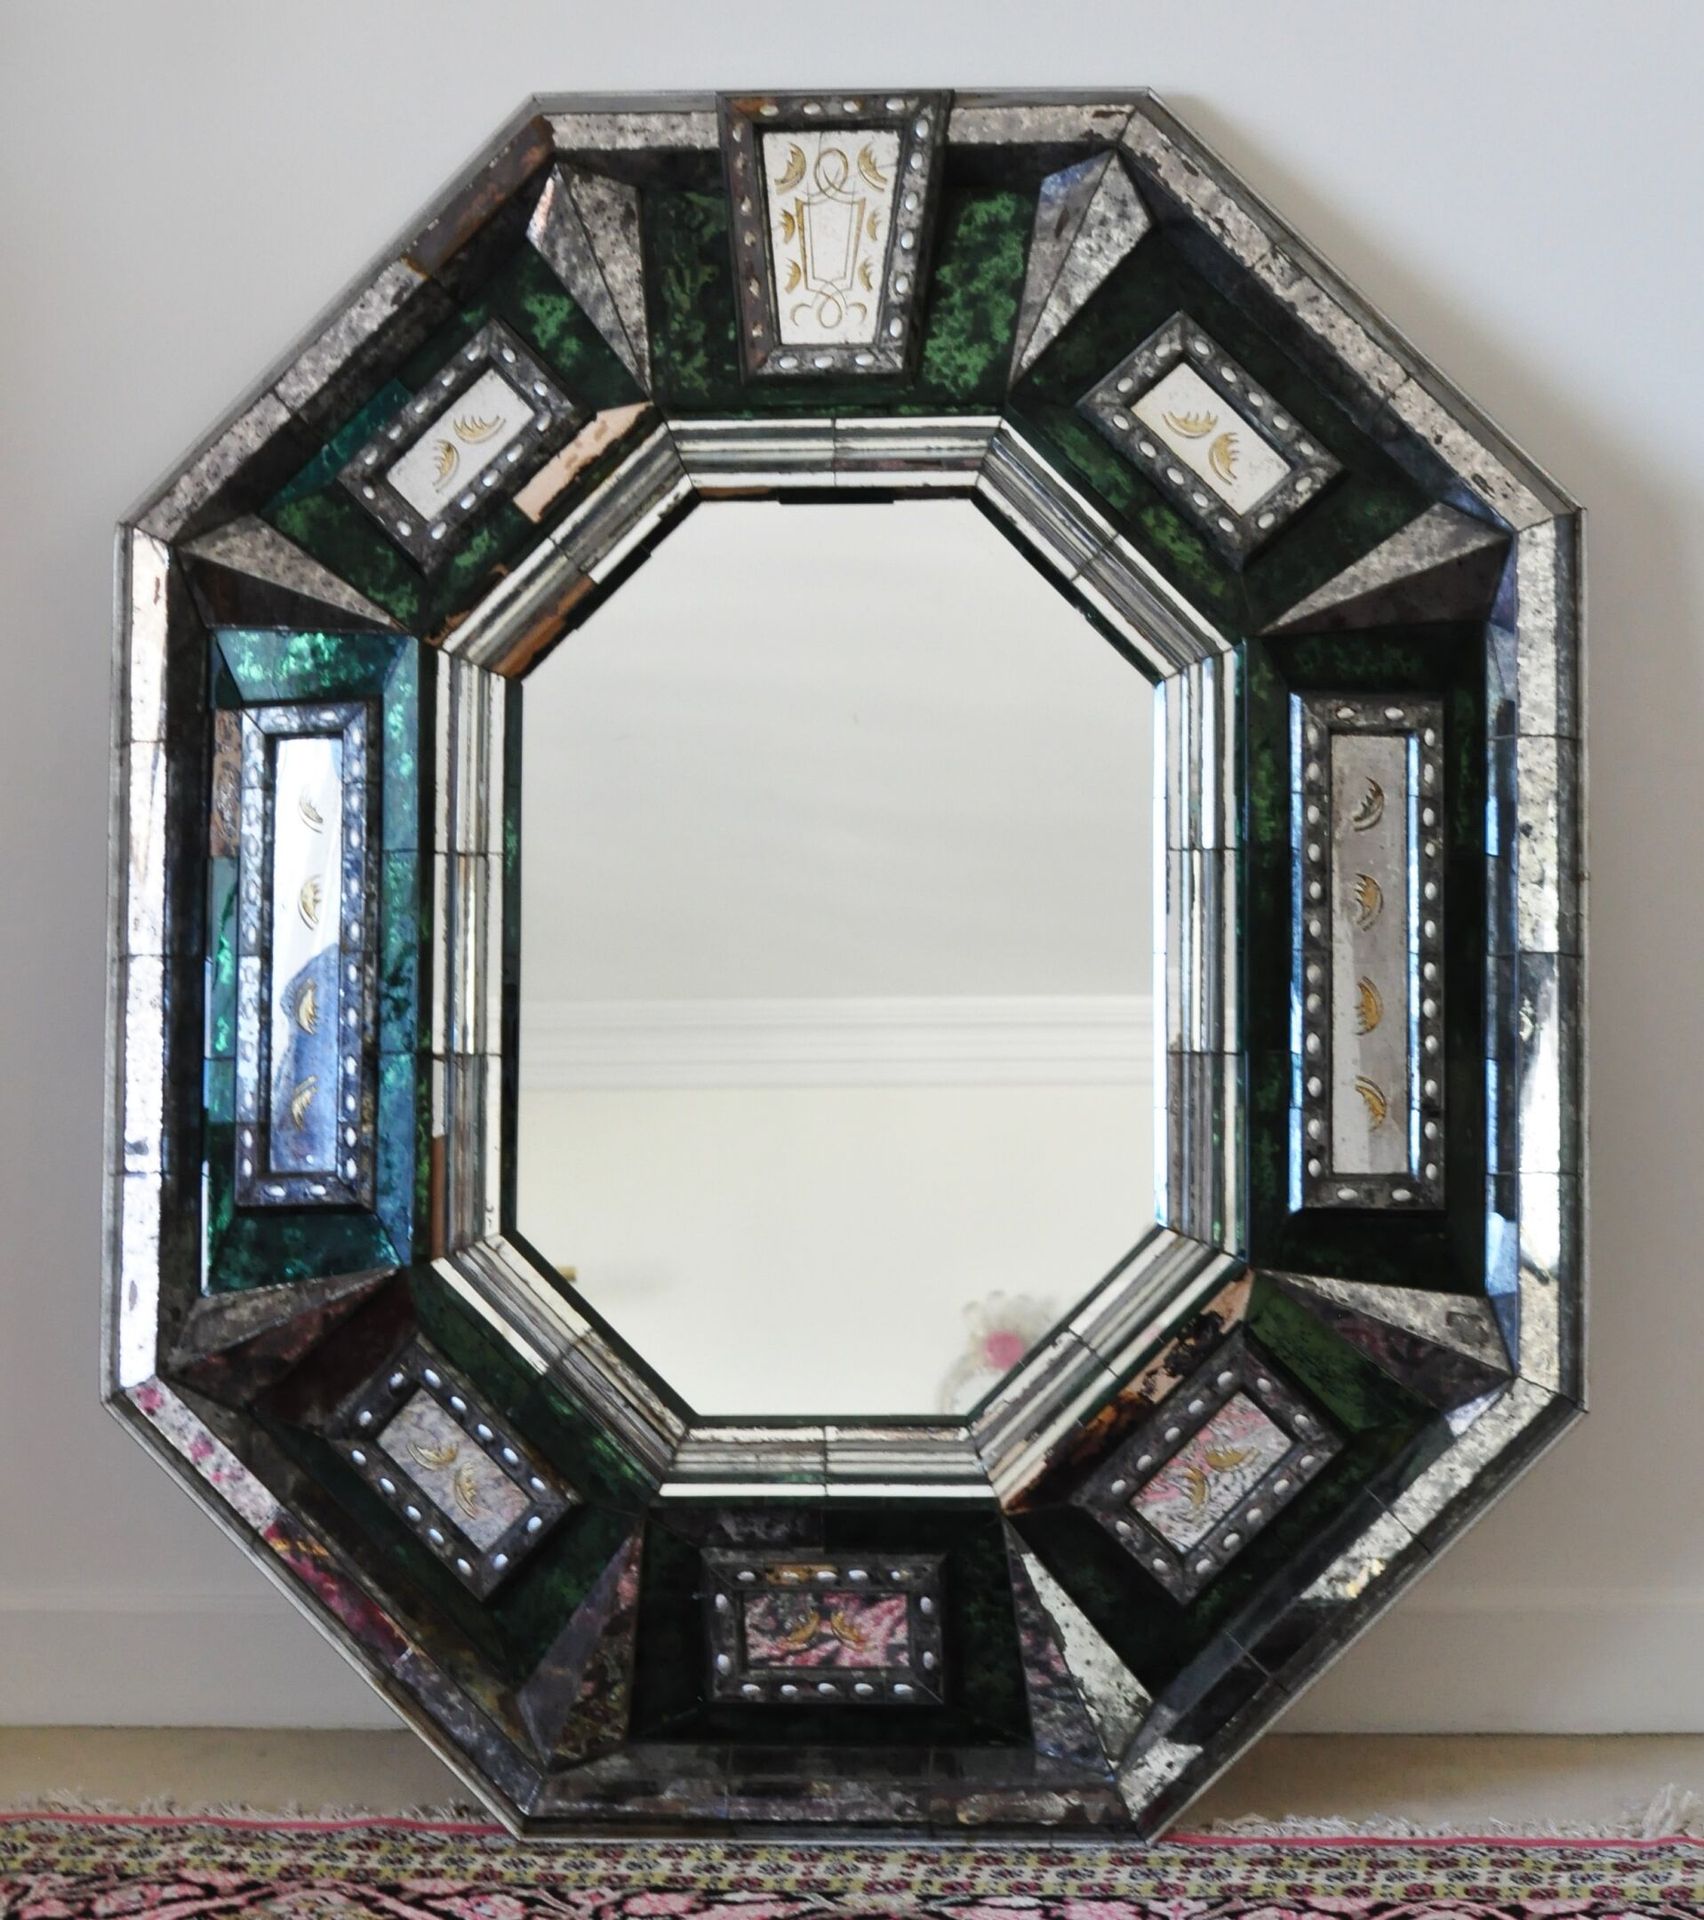 Null 大的八角形镜子，有釉珠，框架有一个凸出的装饰有几何图案的部分着色的绿色和银色的铜锈。威尼斯风格的现代作品。

尺寸：130 x 110 cm

(小姐&hellip;